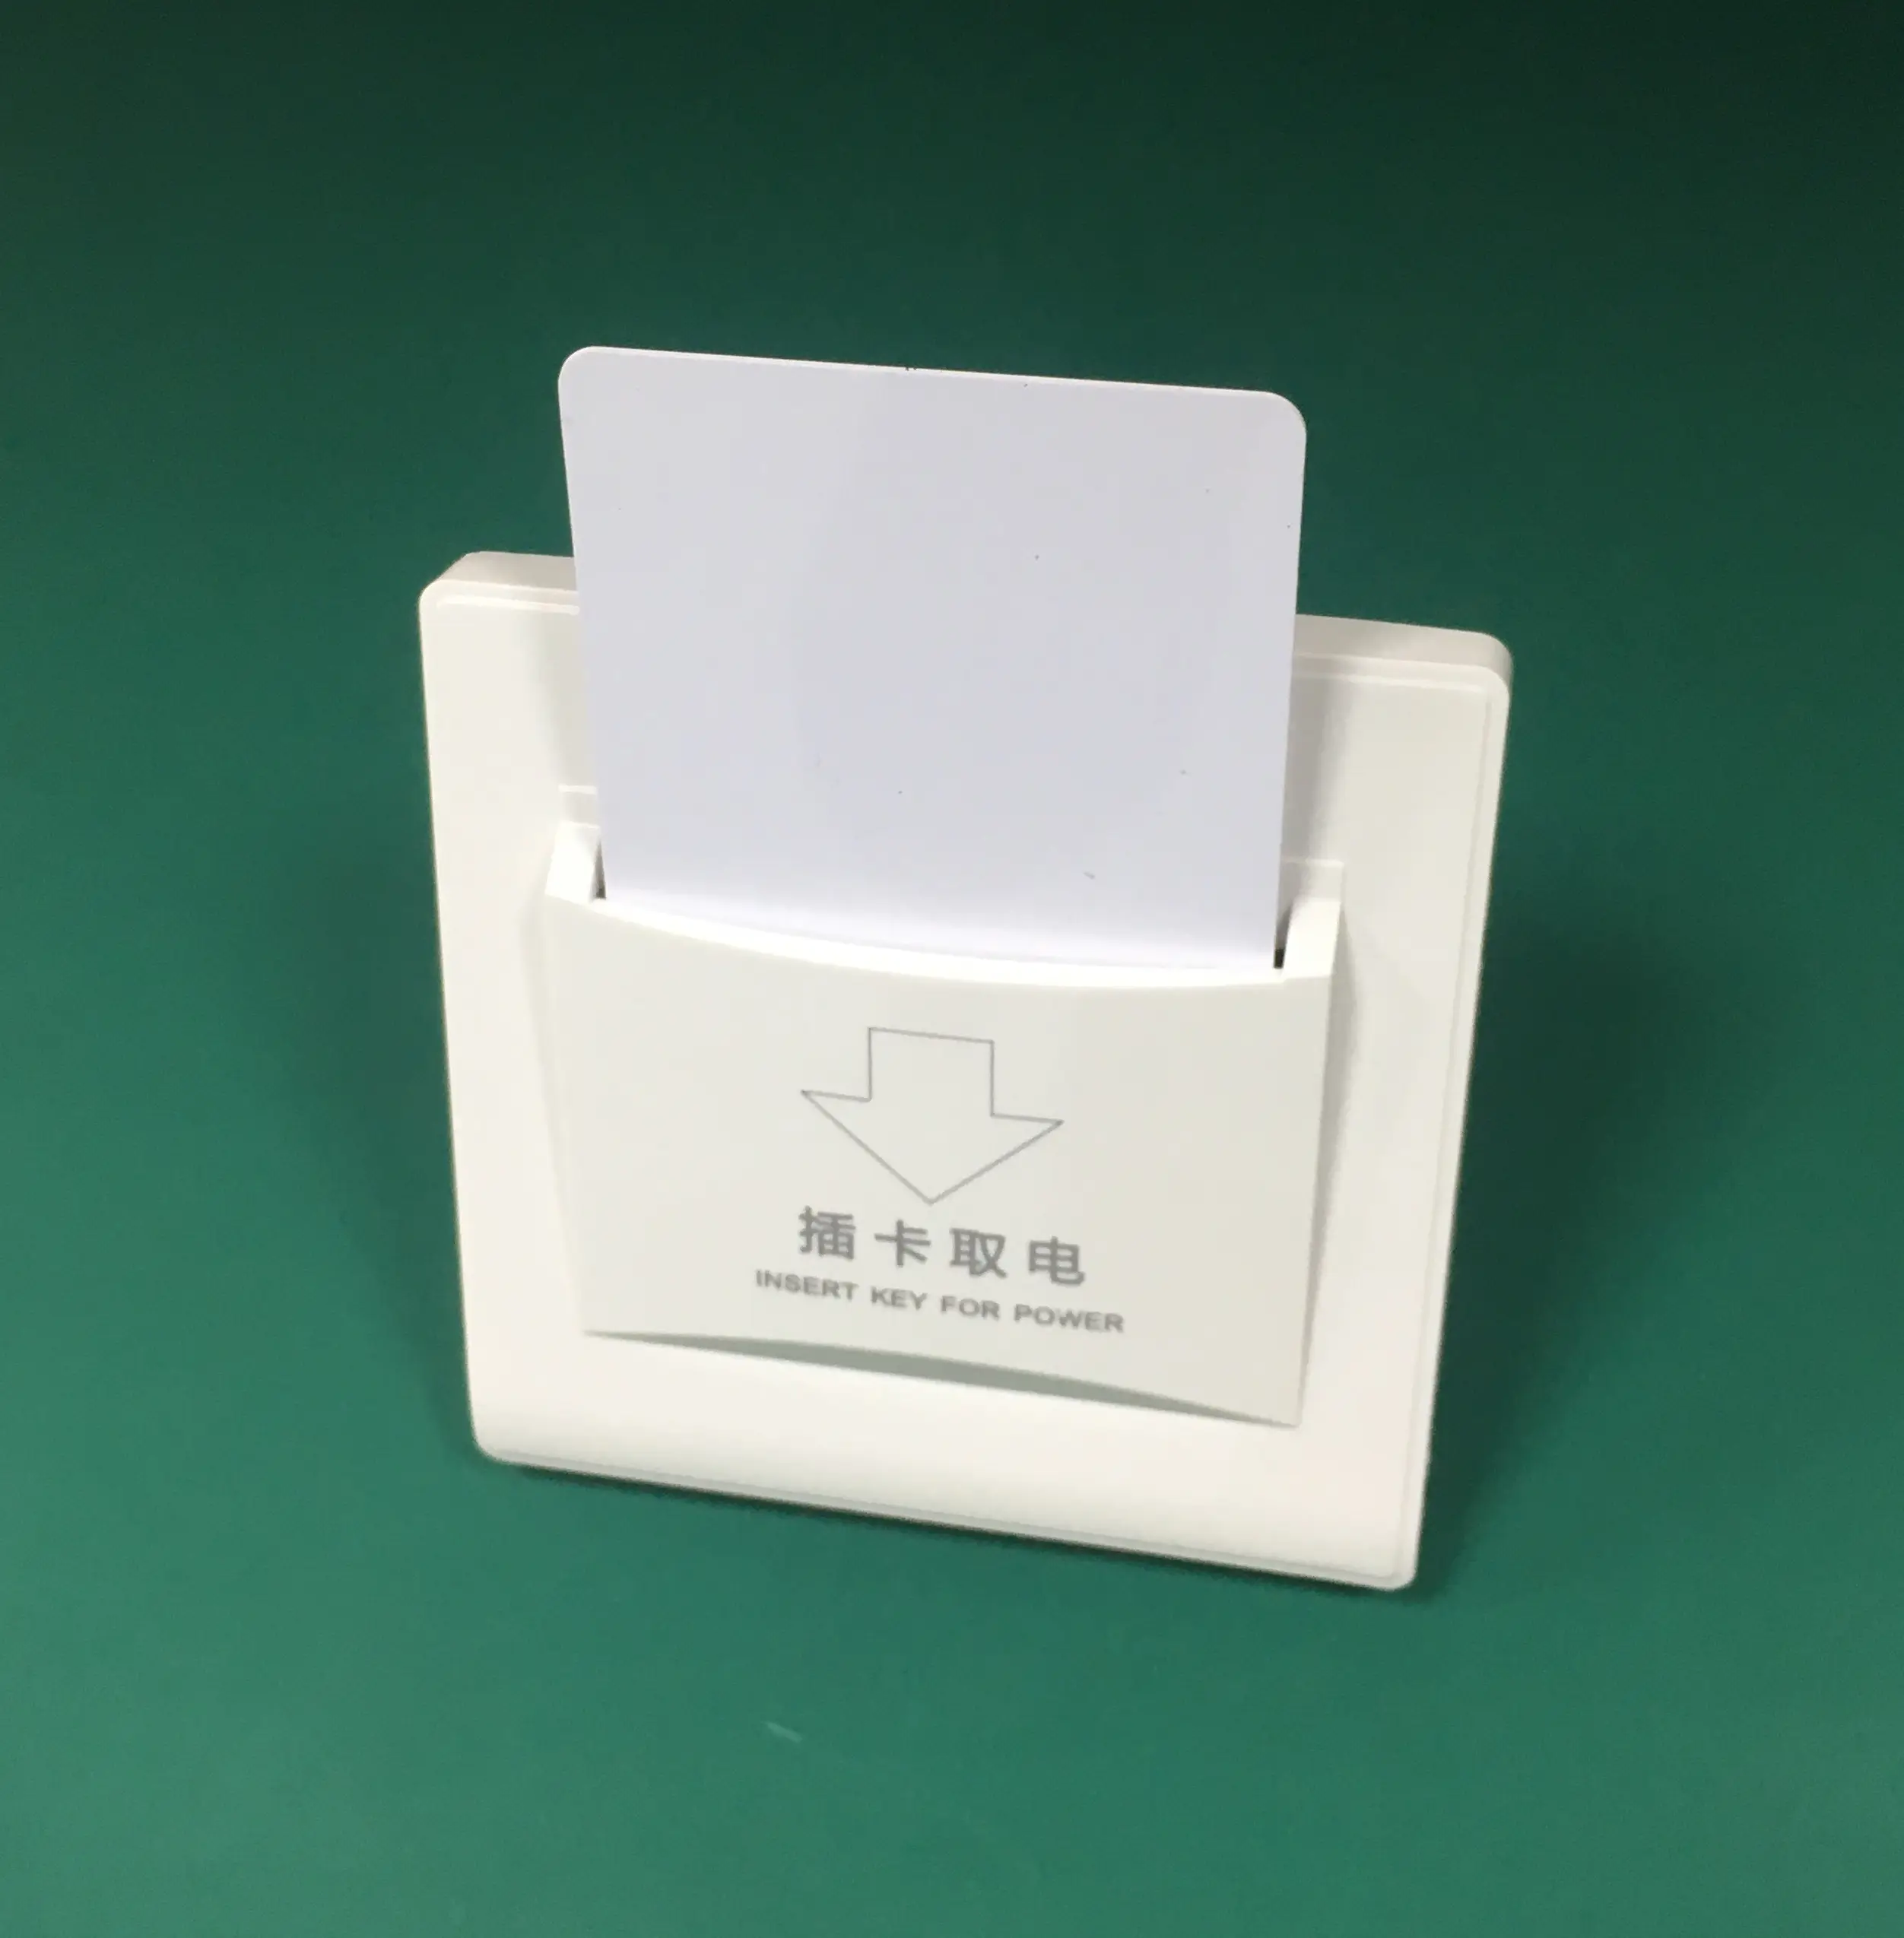 Hotel room energy saving switch any key card insert power switch QL-5001